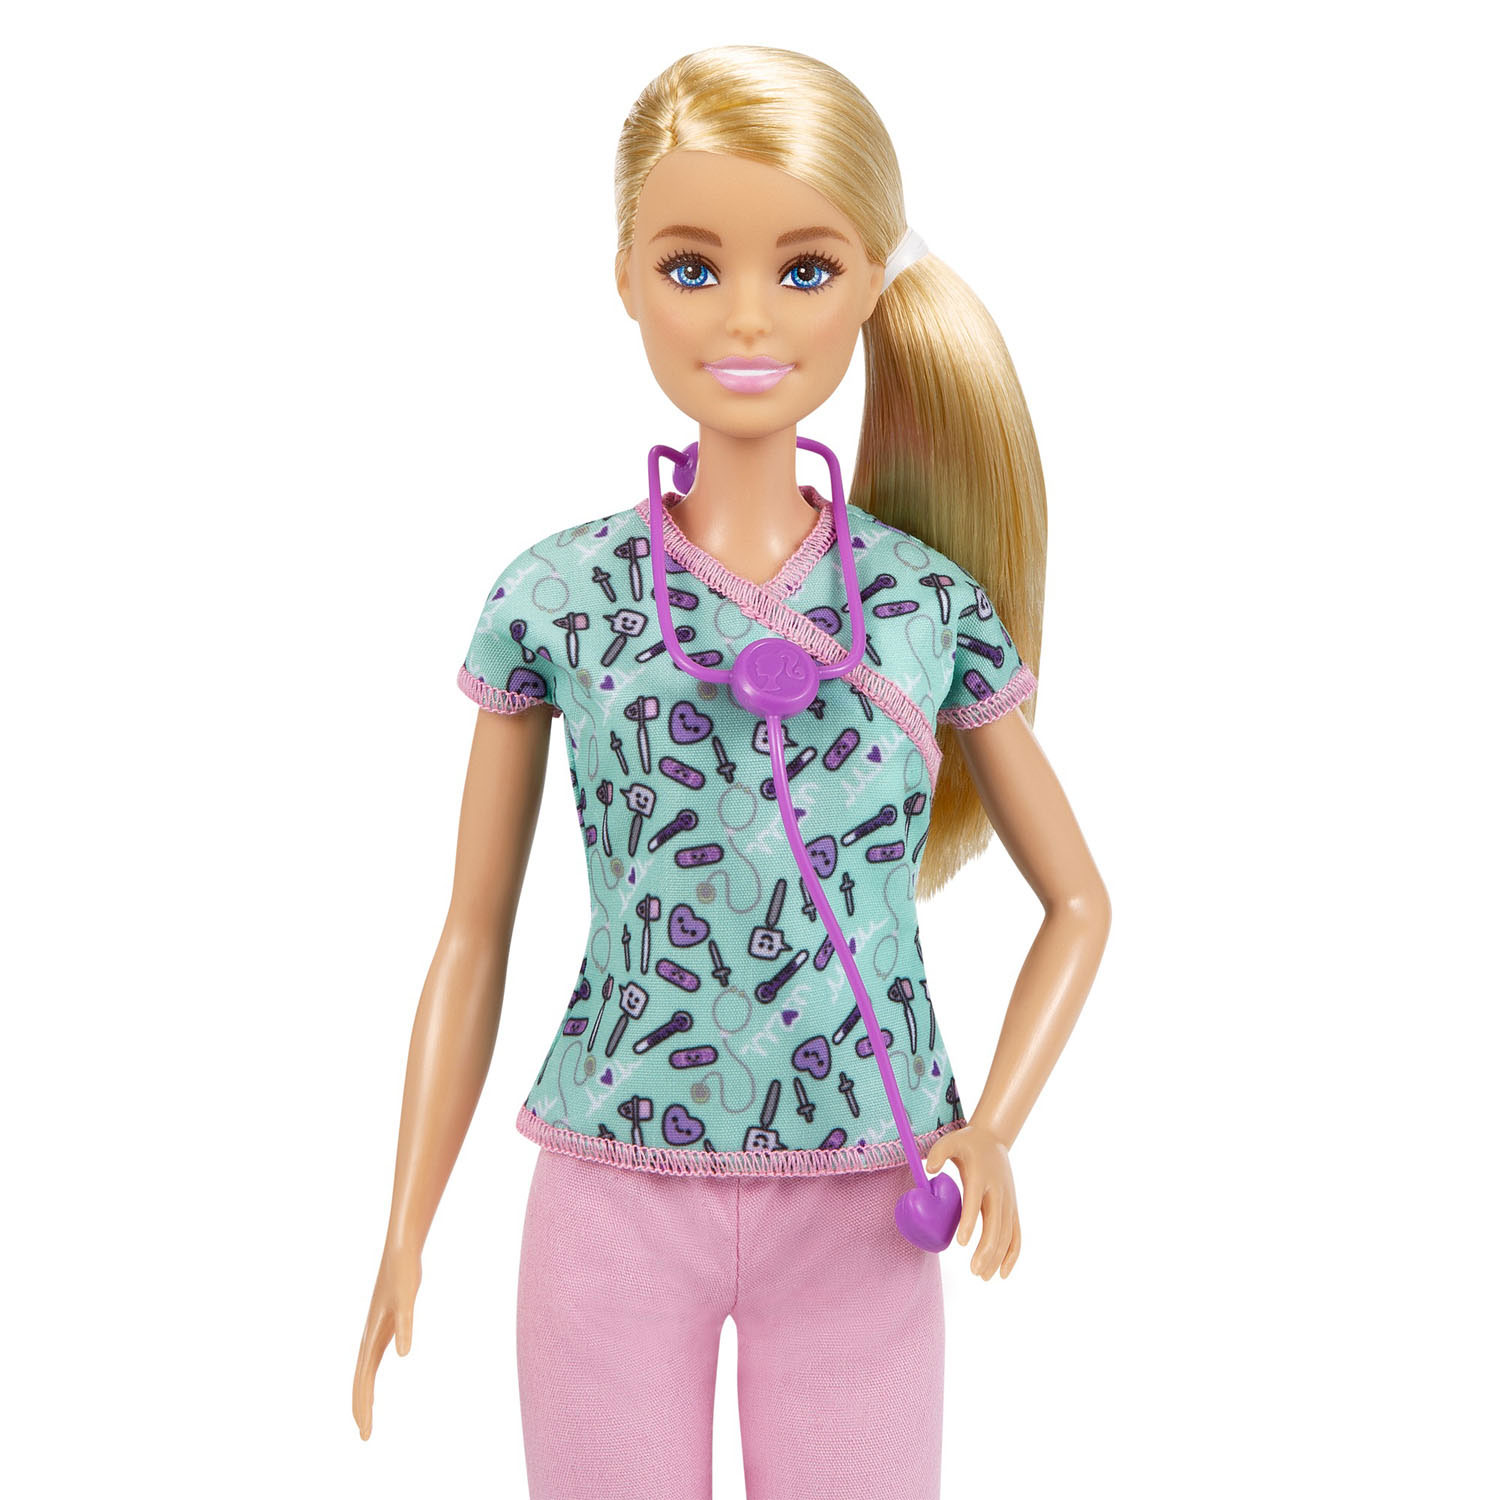 B.C. stormloop passen Barbie Nurse | Thimble Toys